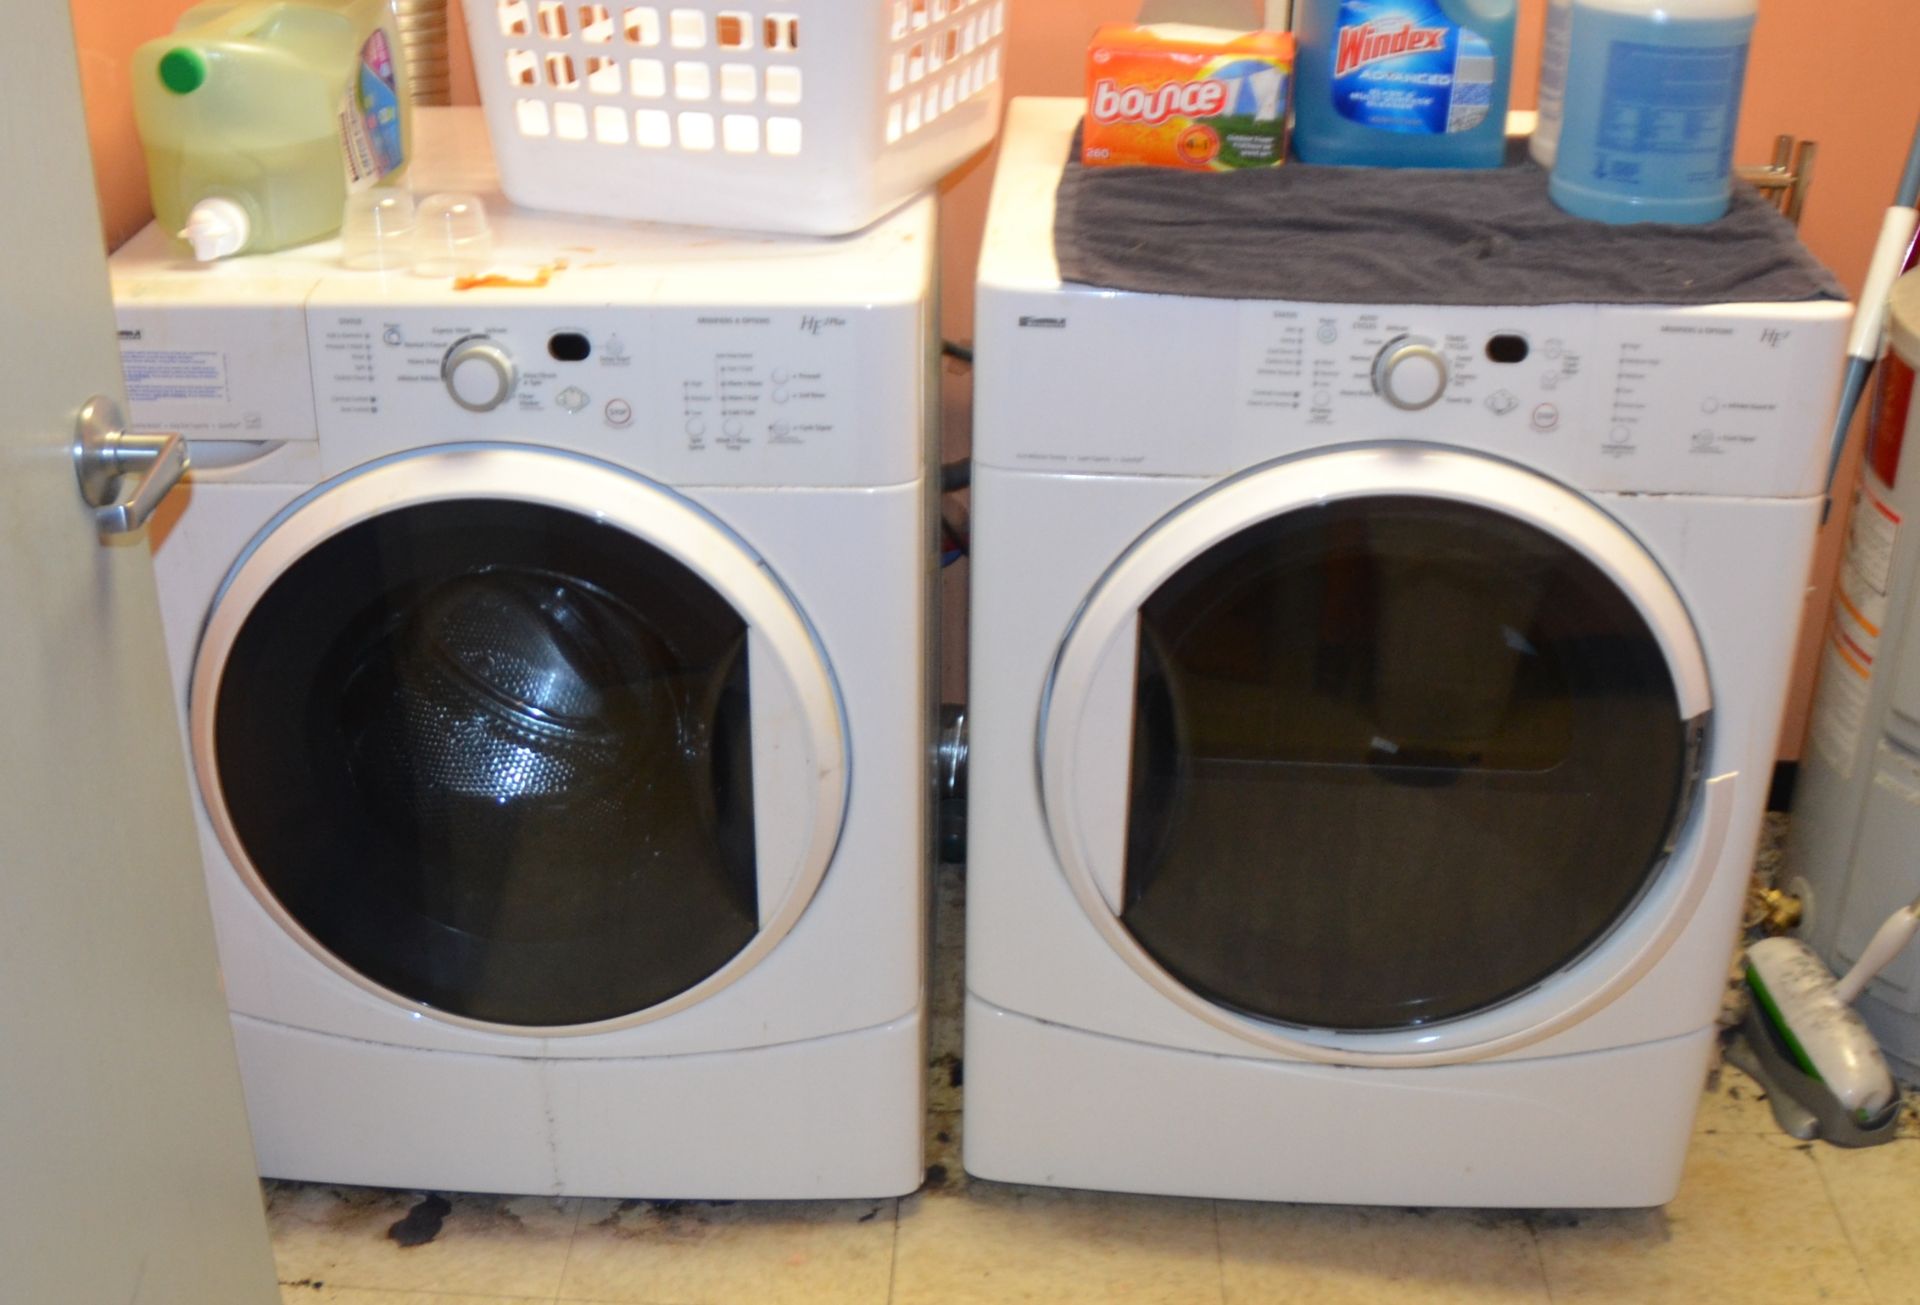 Lot - Kenmore HE 2 Plus Front Load Washing Machine, Kenmore HE 2 Plus Front Load Dryer